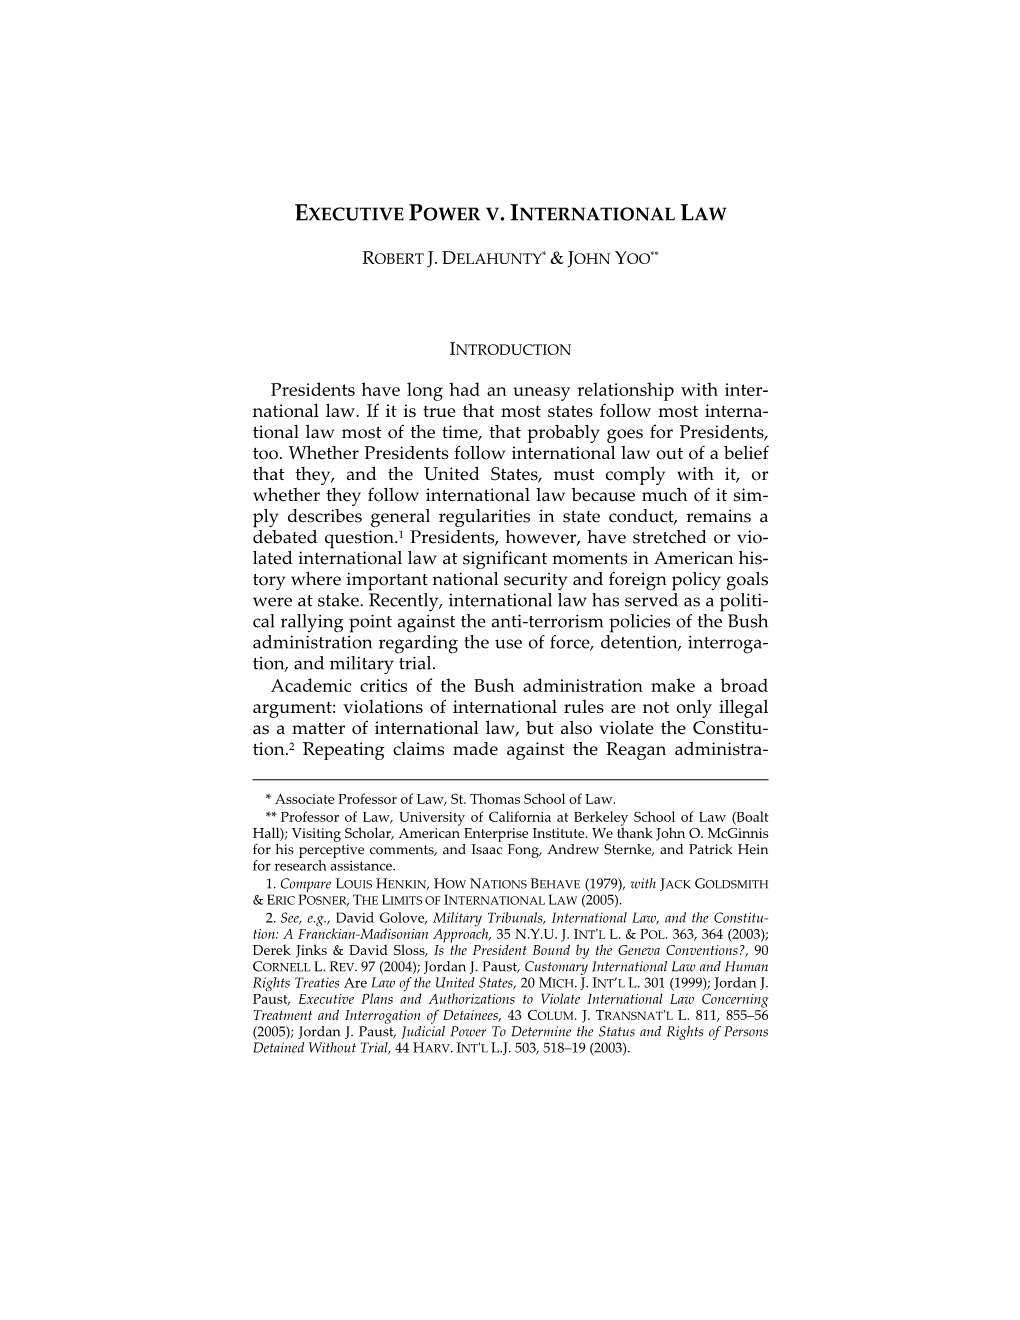 Executive Power V. International Law